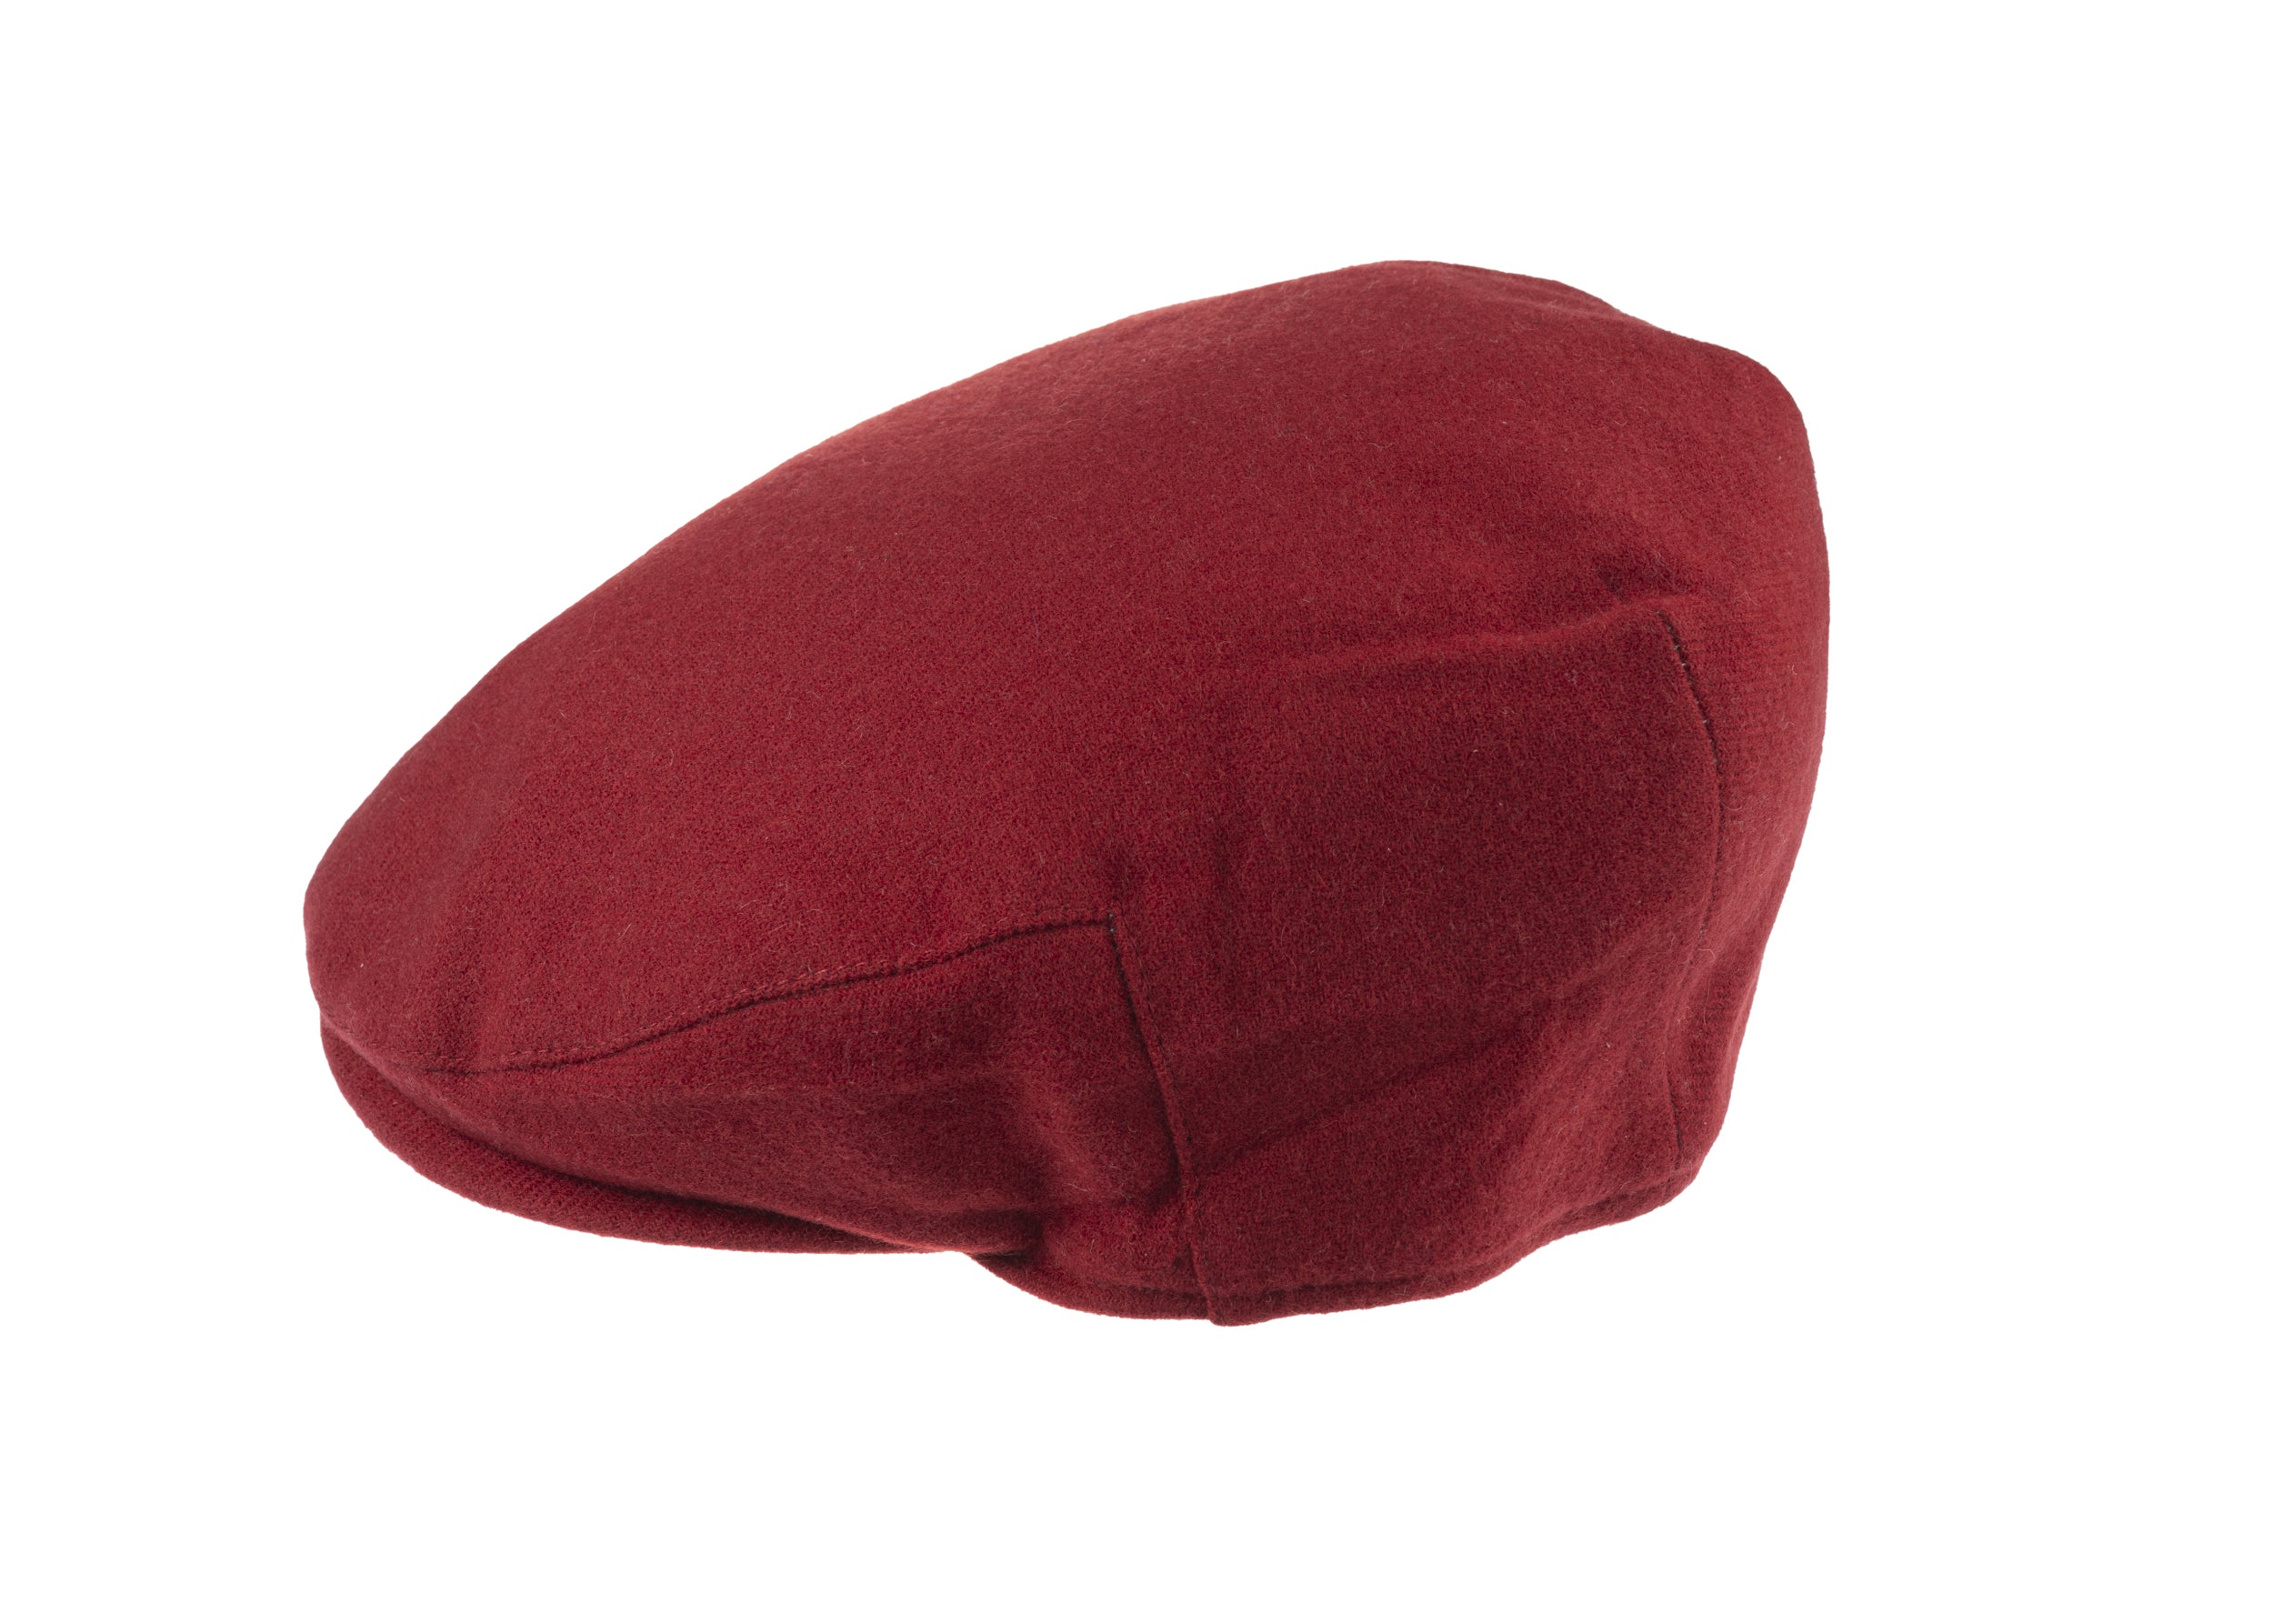 Josh balmoral flat cap in cashmere/wool blend fabric in Red